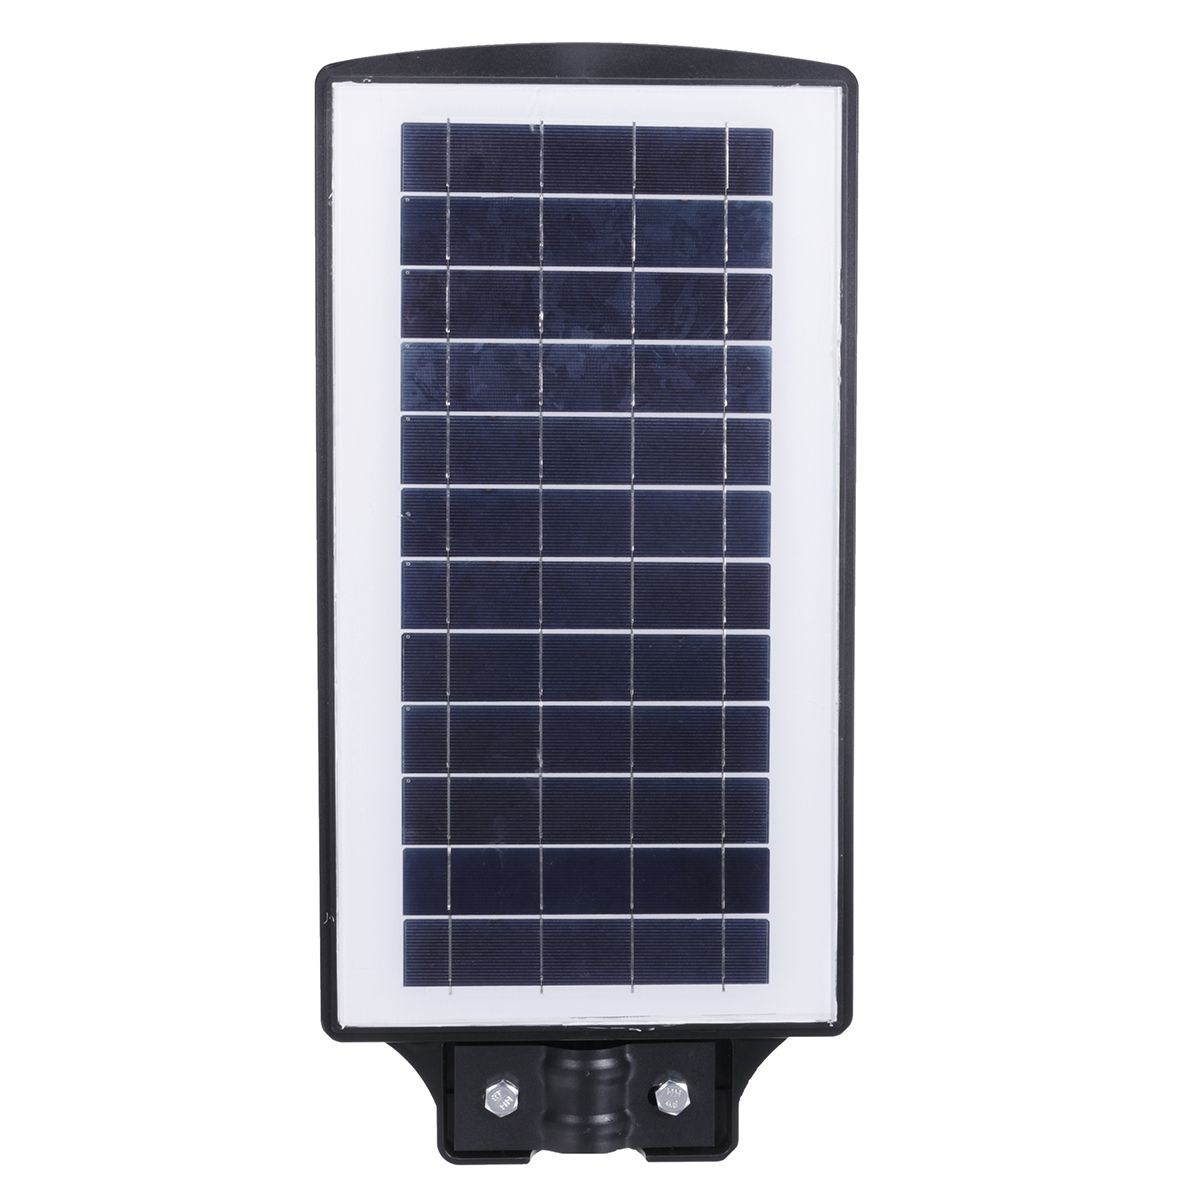 462-LED-Waterproof-Wall-Street-Light-Solar-Panel-Radar-Sensor-Lamp-with-Remote-Control-1621493